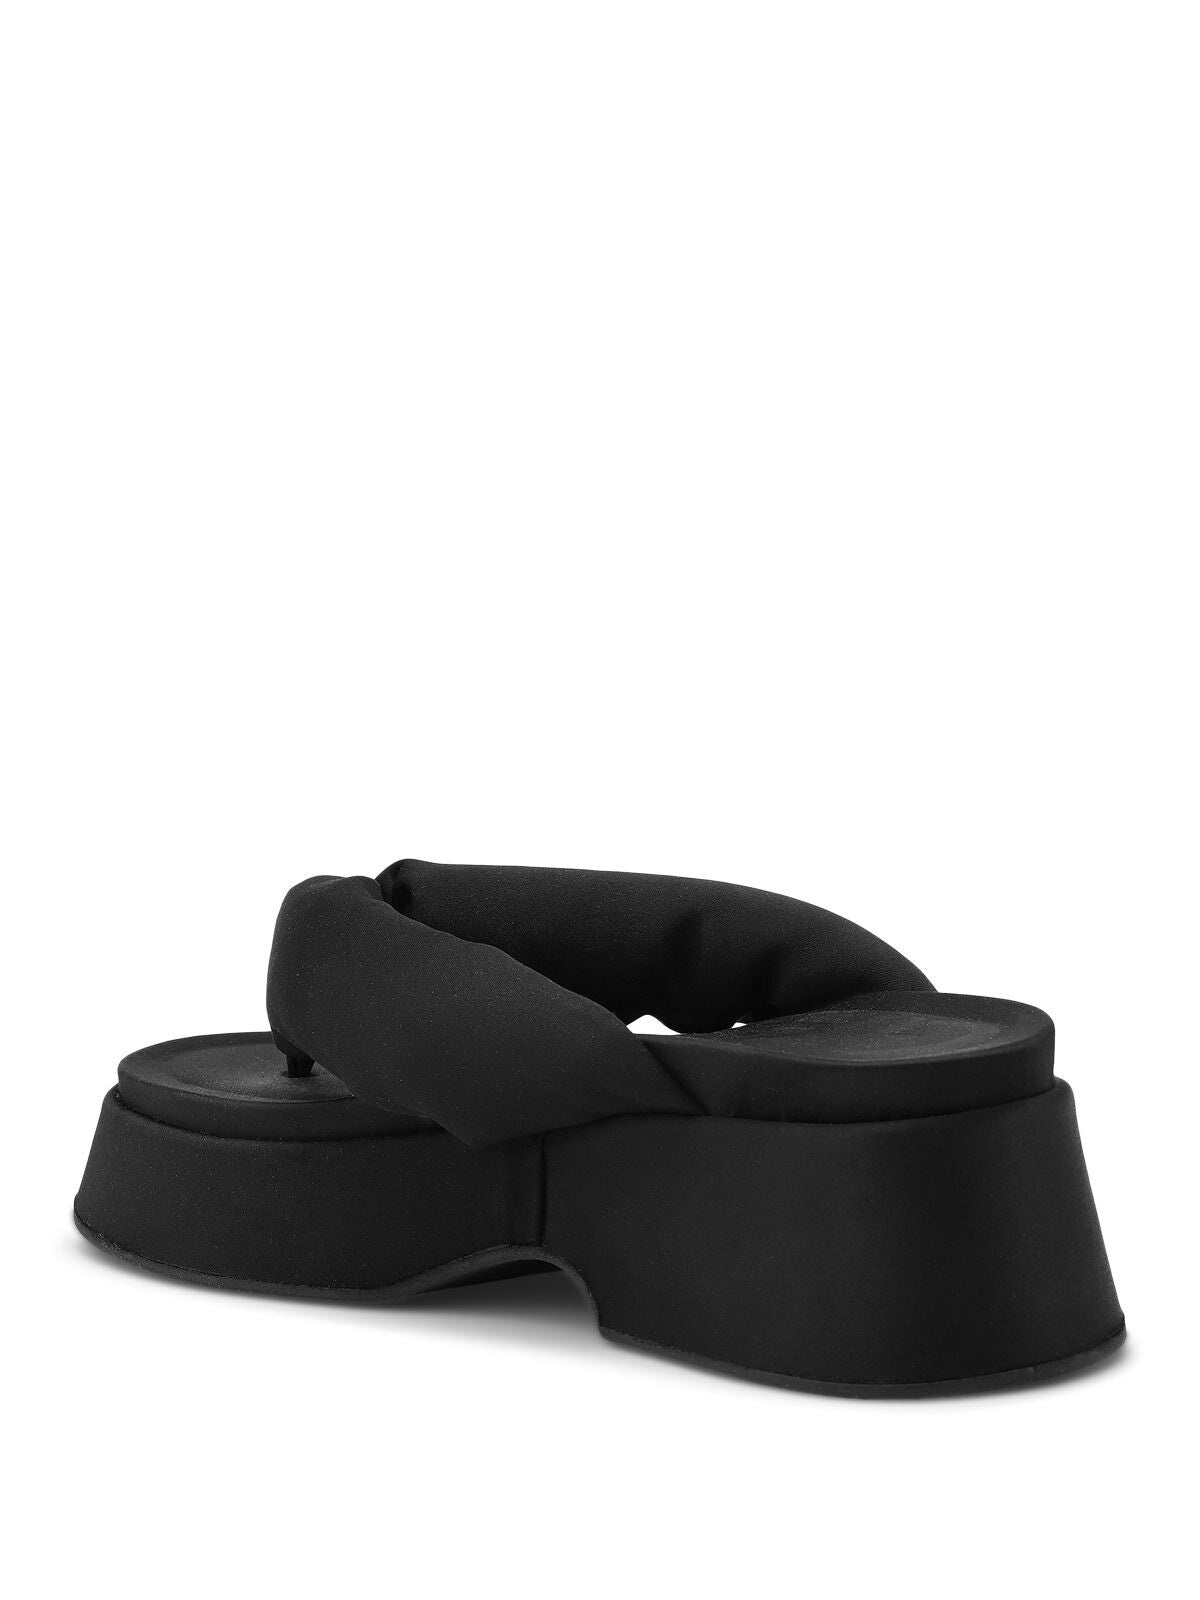 GANNI Womens Black 1" Platform Comfort Retro Round Toe Wedge Slip On Thong Sandals Shoes 36